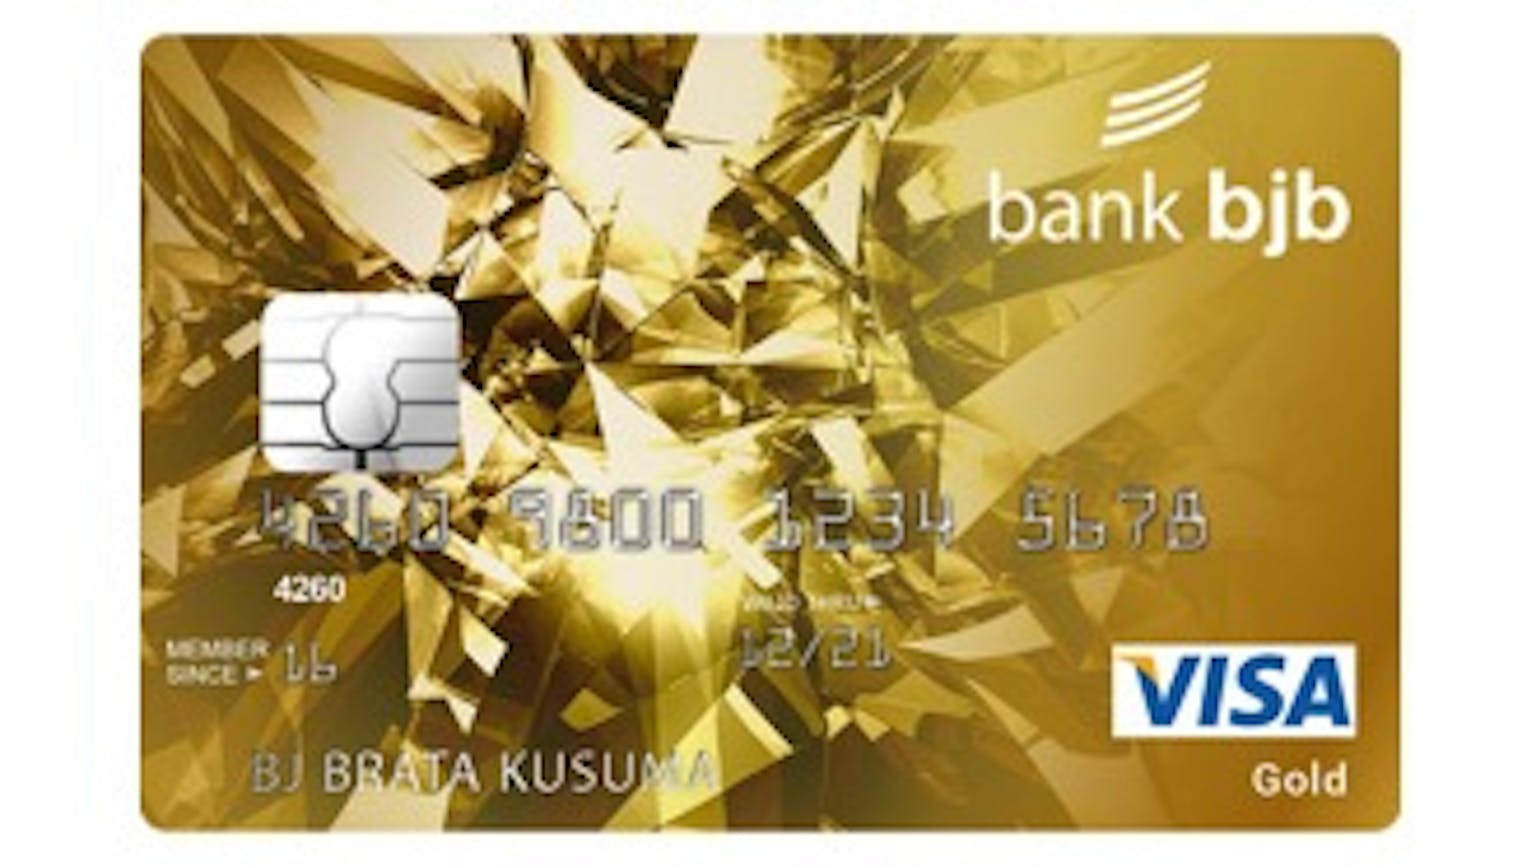 BNI-Bank BJB Gold